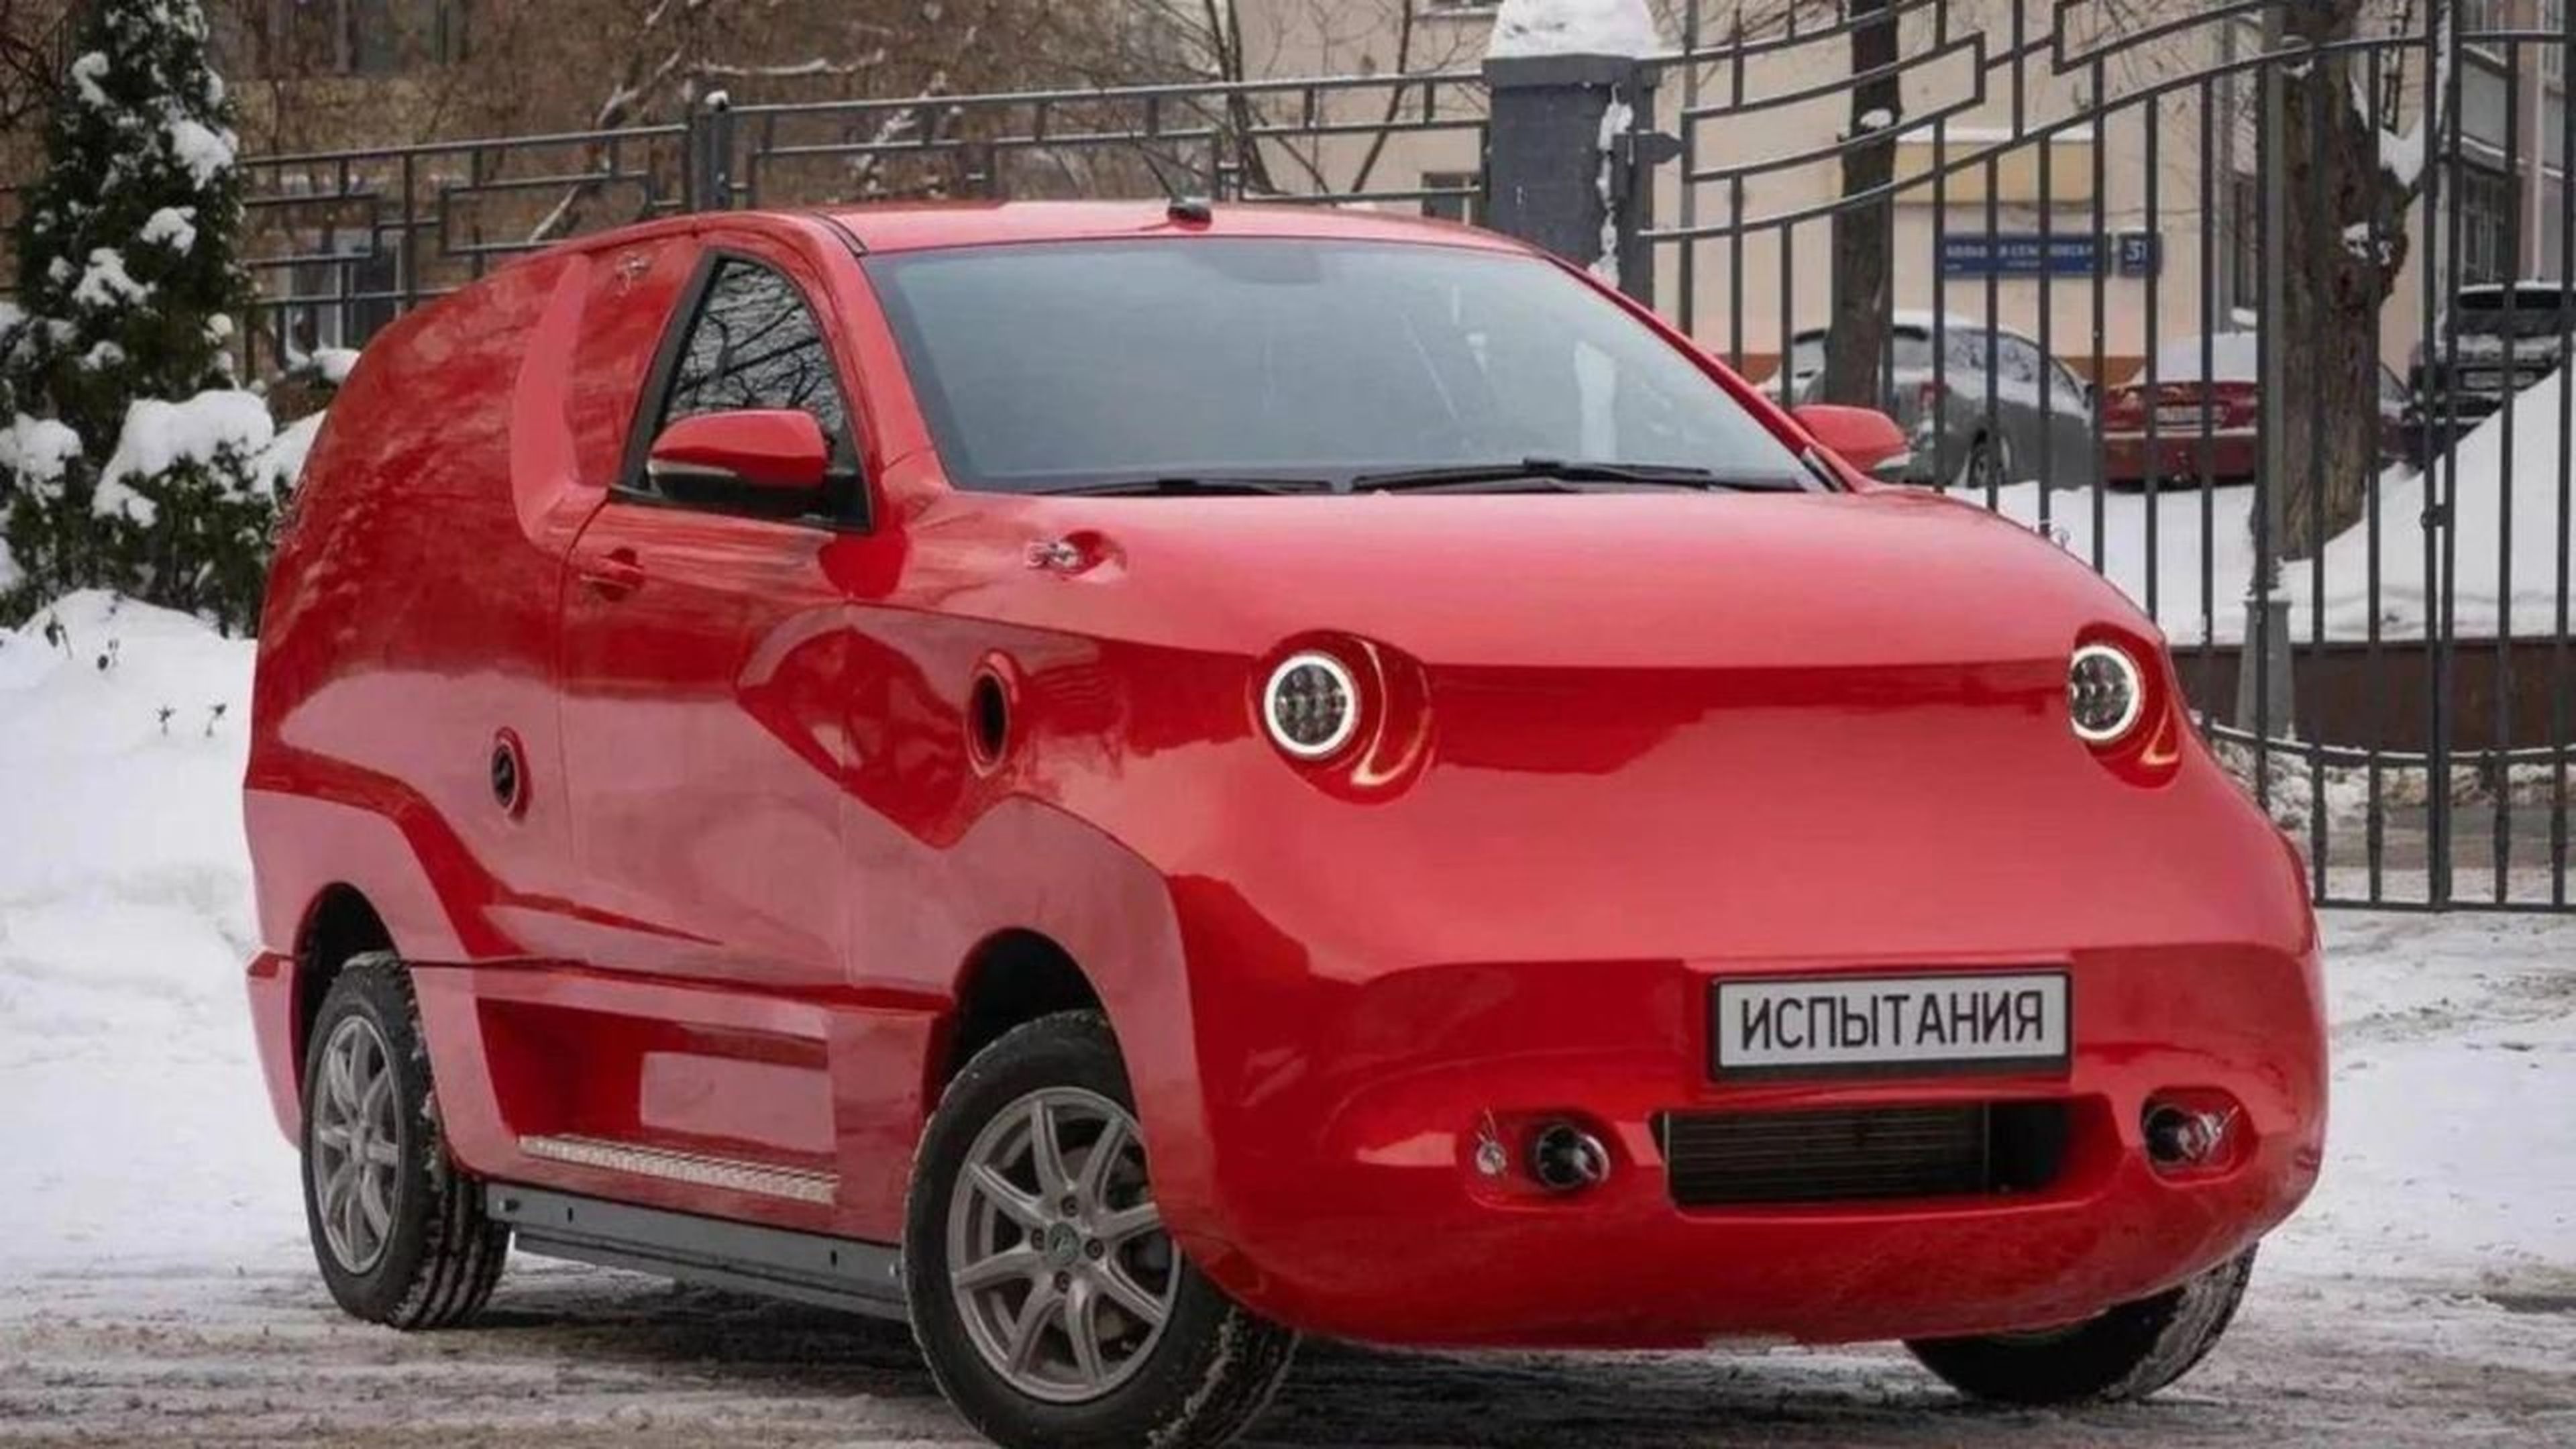 Amber coche ruso eléctrico